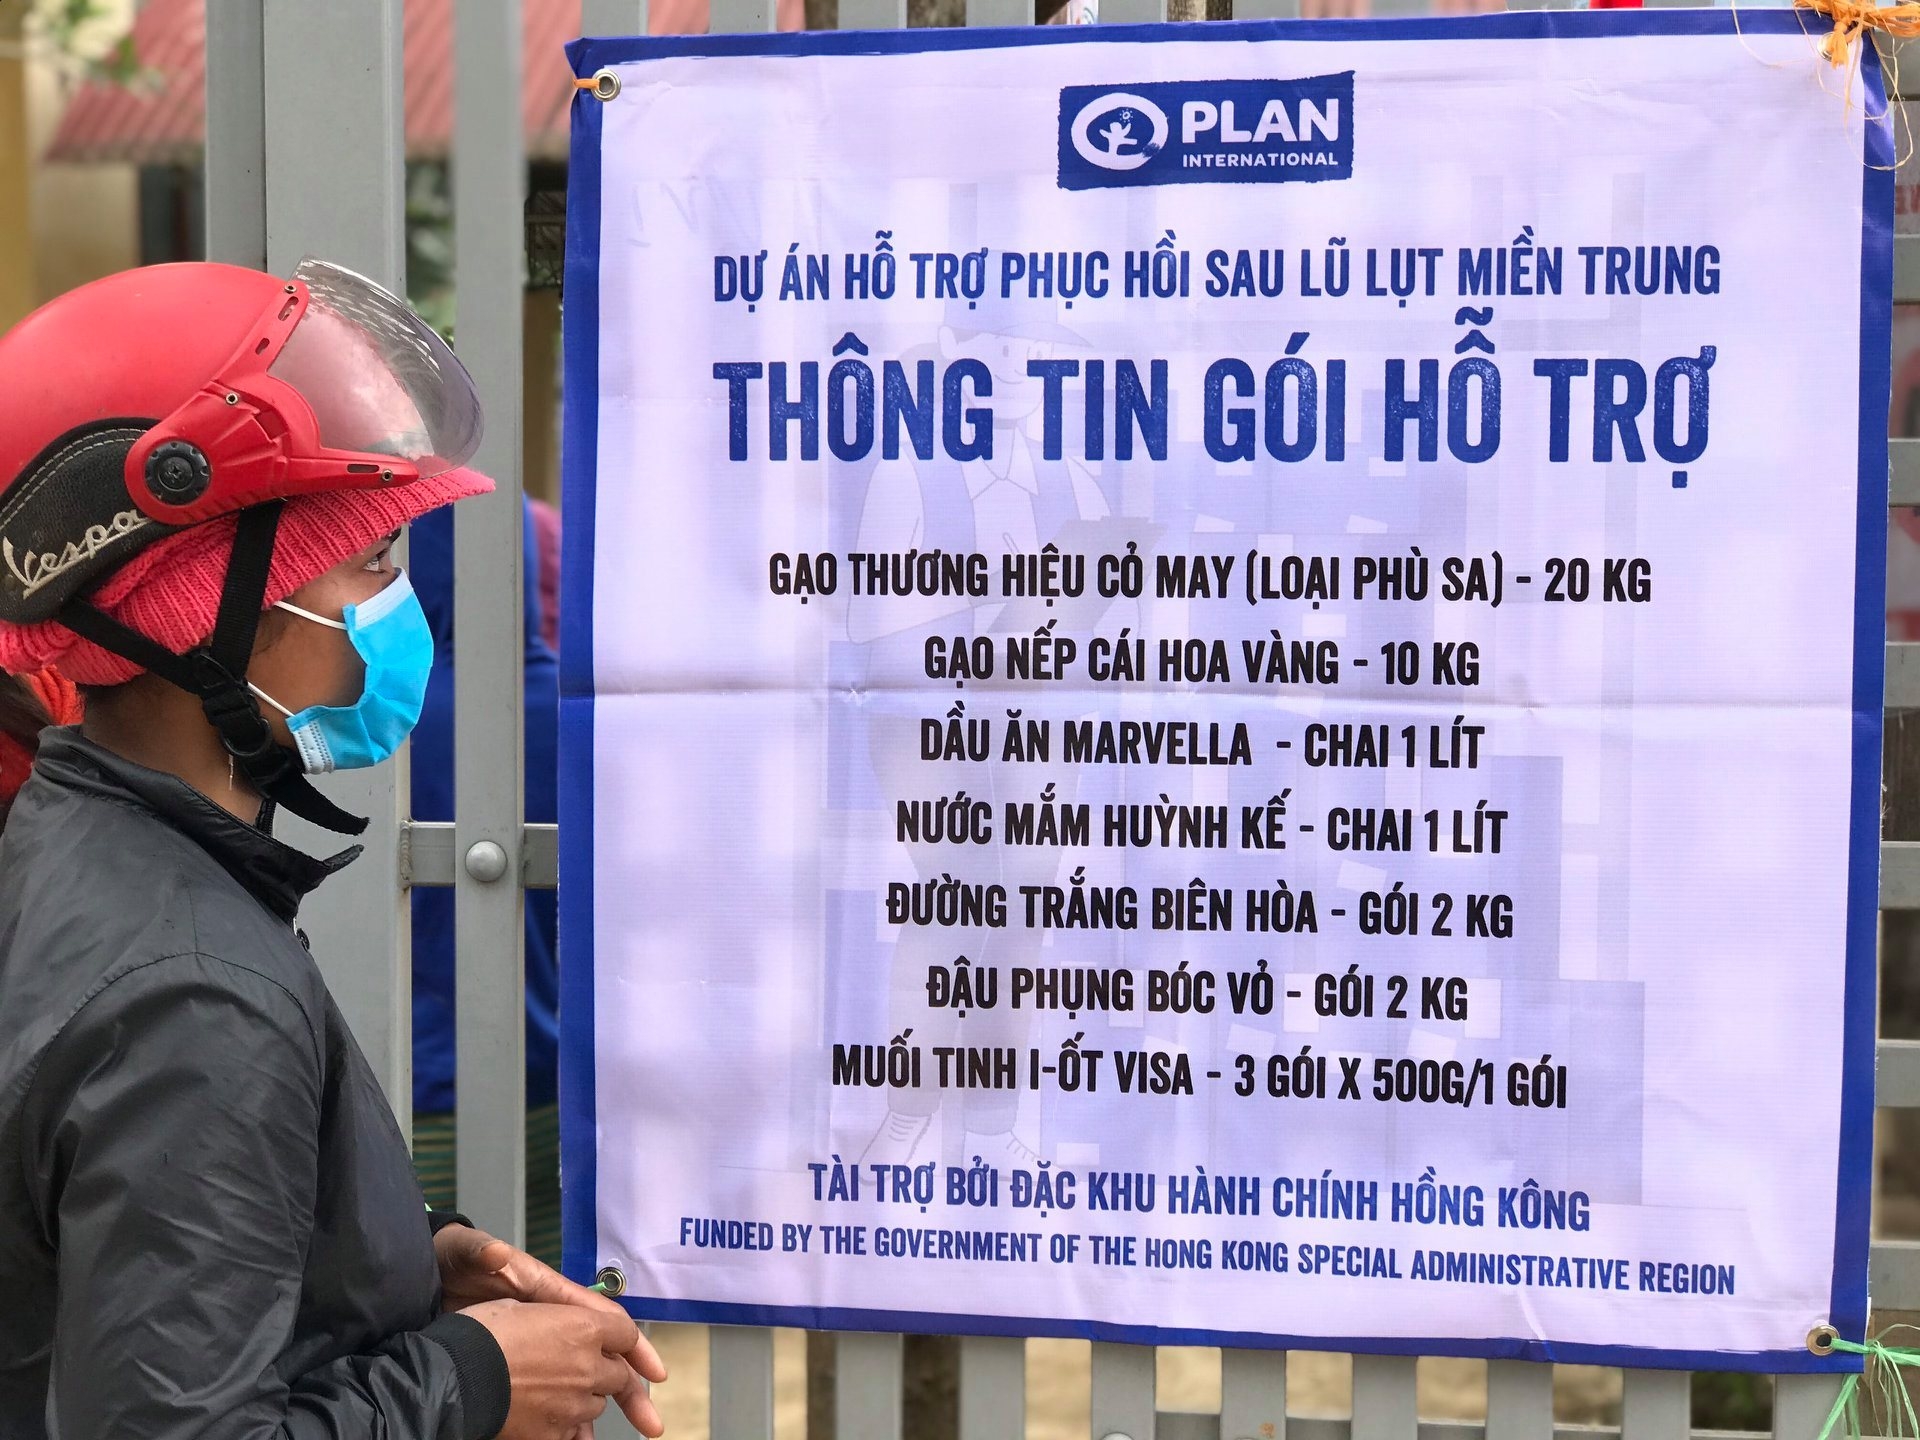 Warm Tet festival amidst COVID-19: Aid sent to help Quang Binh's locals